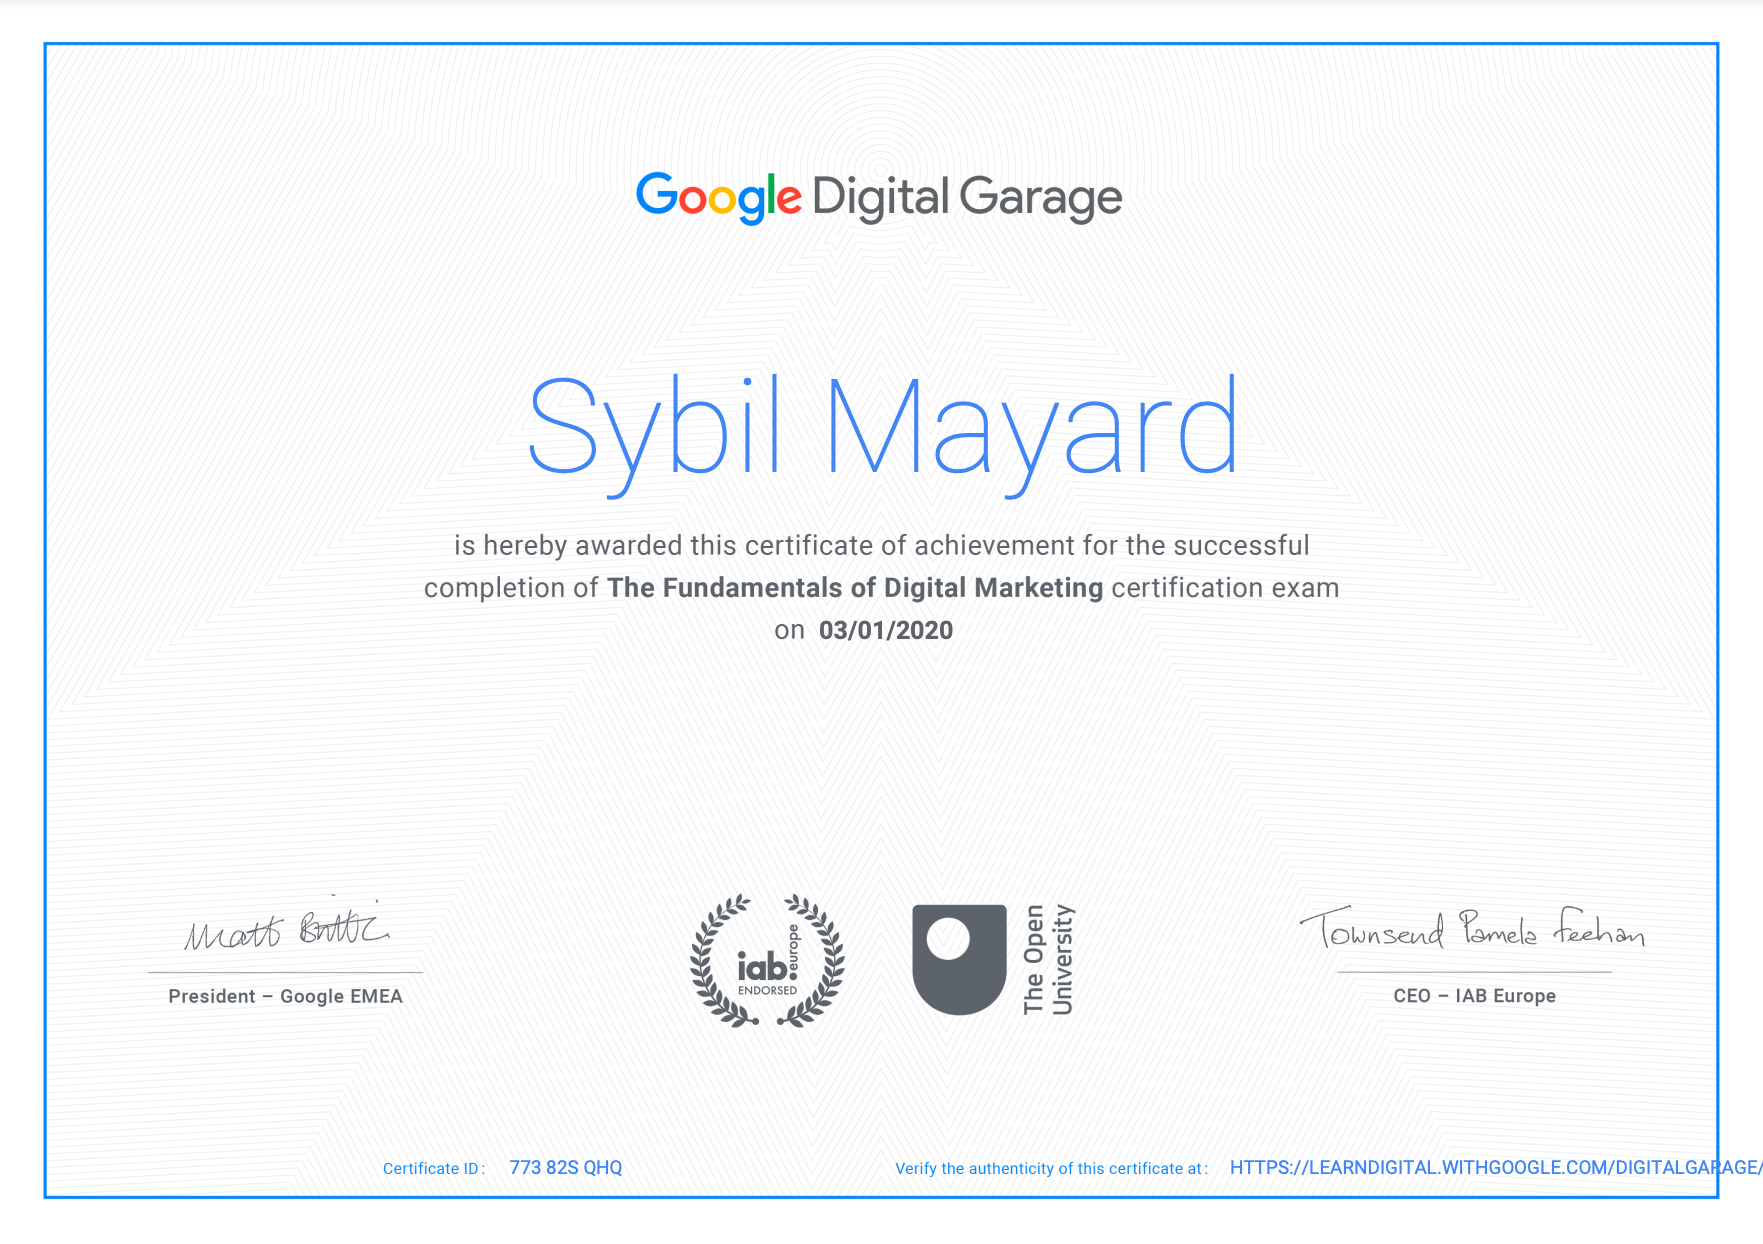 Google Digital Garage The Fundamentals of Digital Marketing certificate